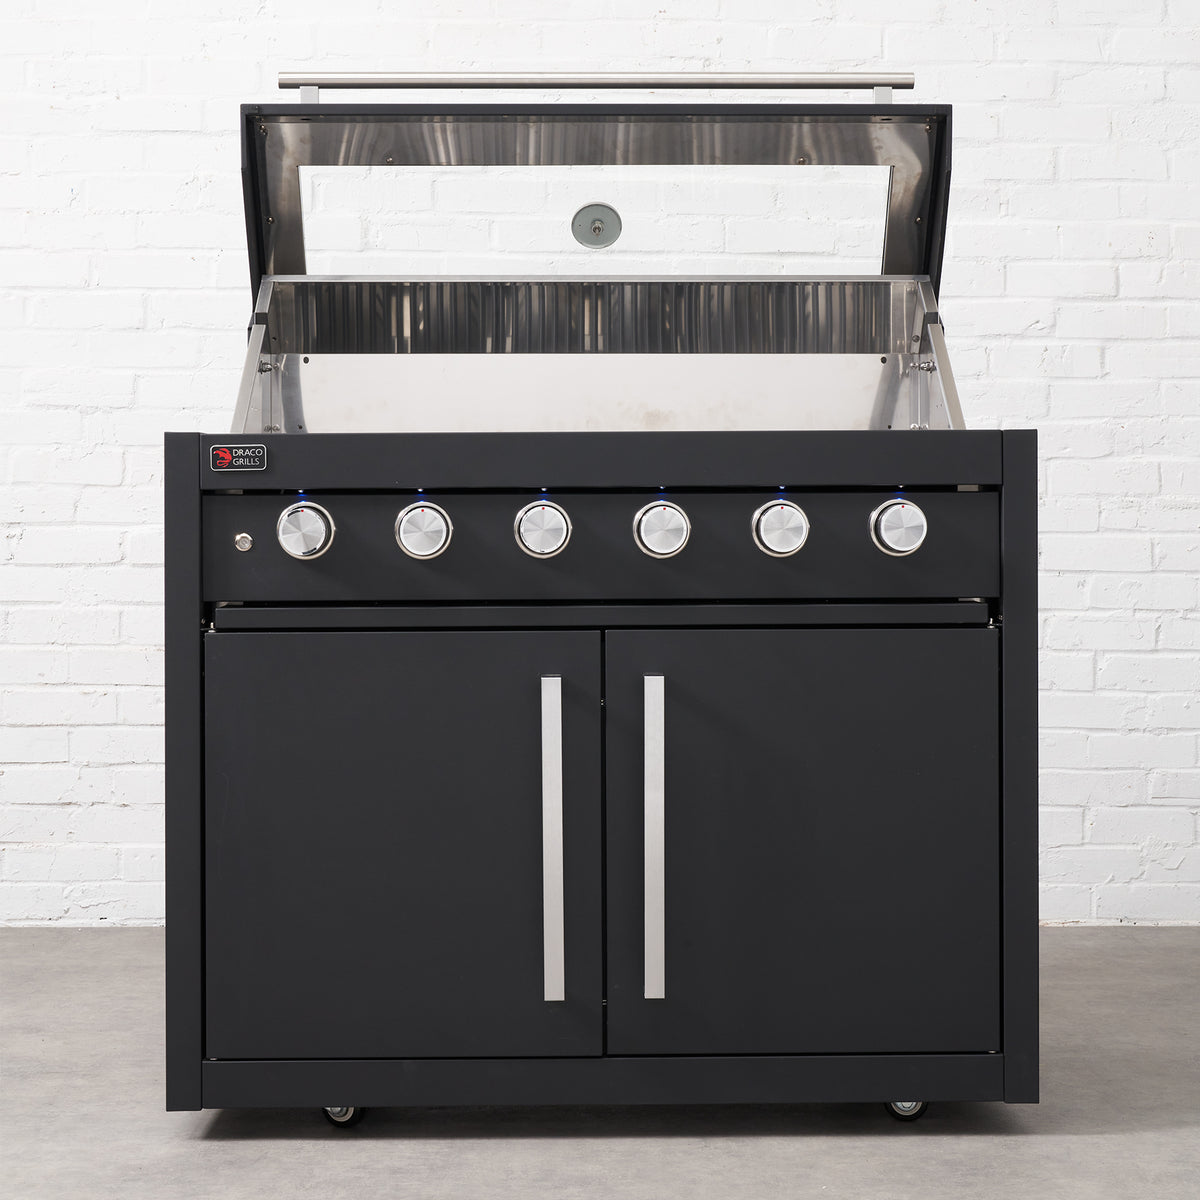 Draco Grills Fusion 6 Burner Black Outdoor Kitchen with Modular Side Burner, Sink, Single Fridge